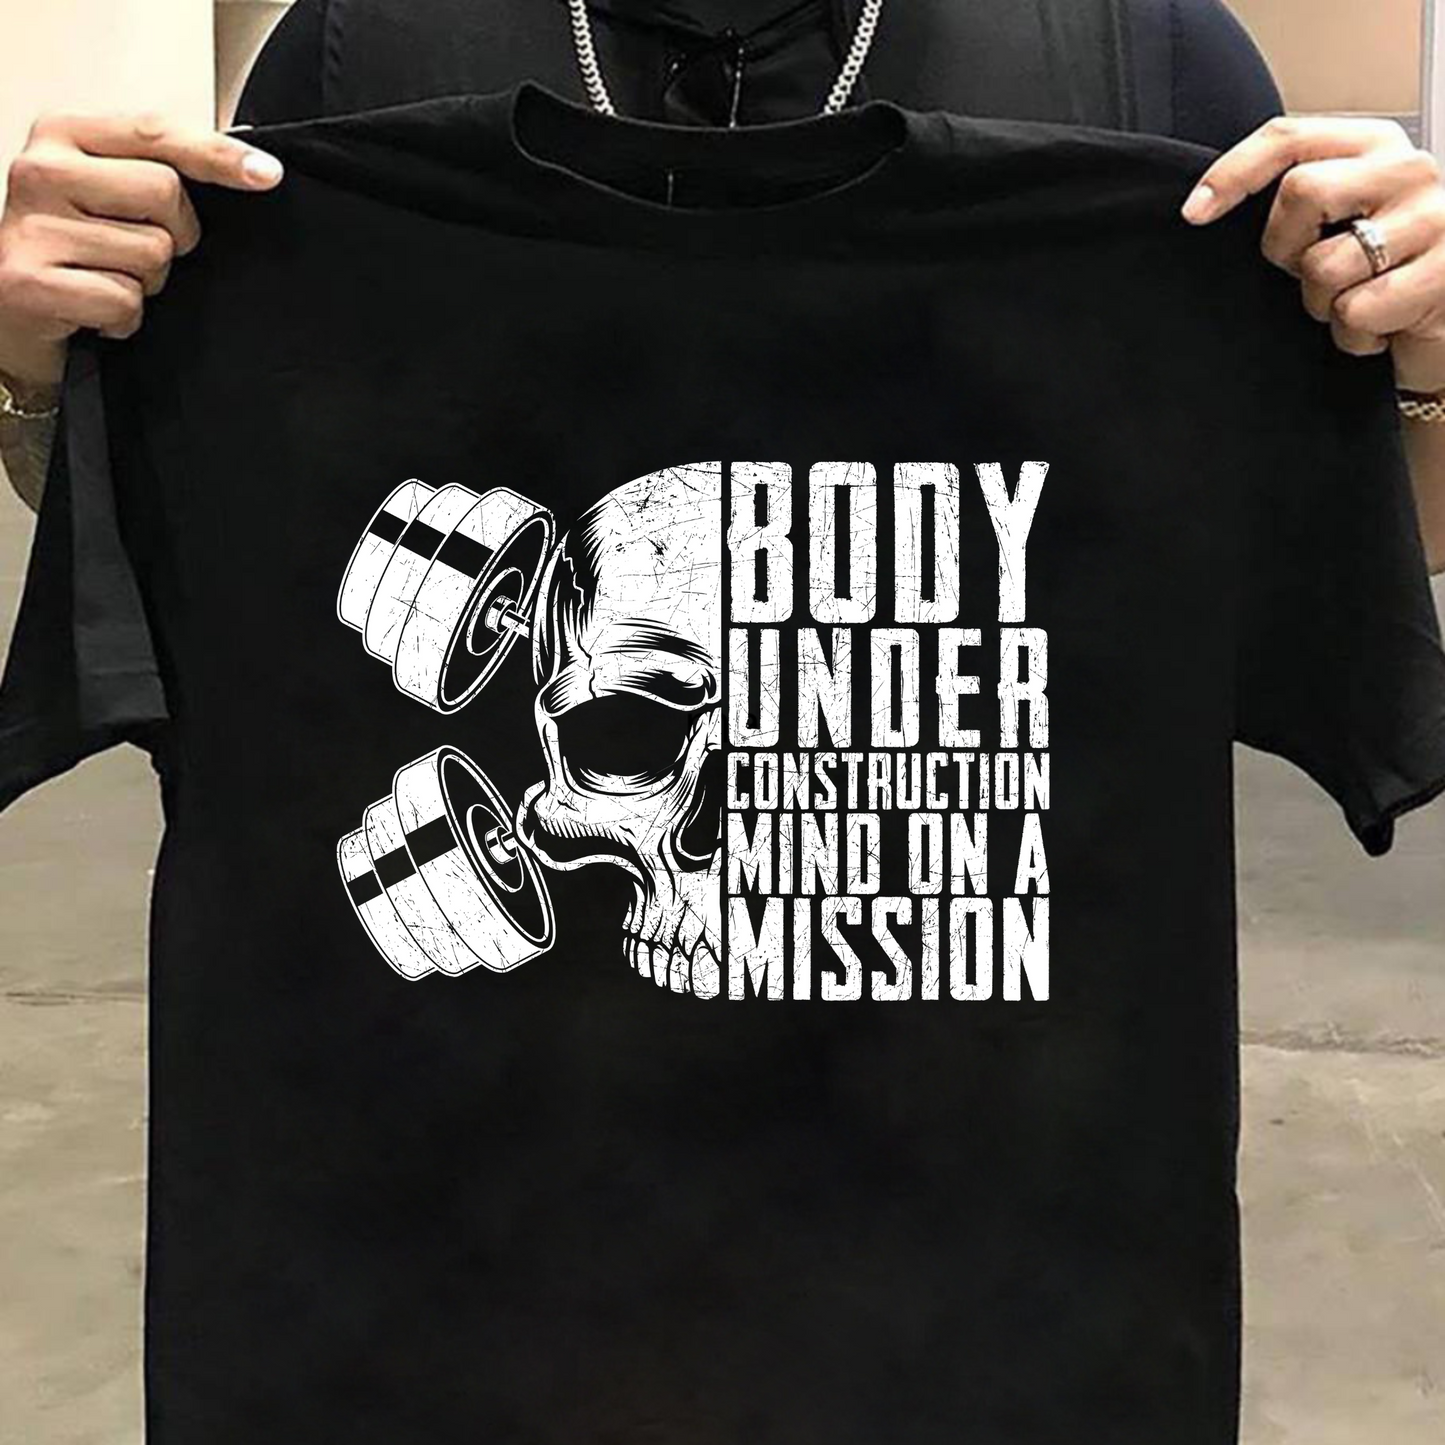 Mission-Minded T-Shirt